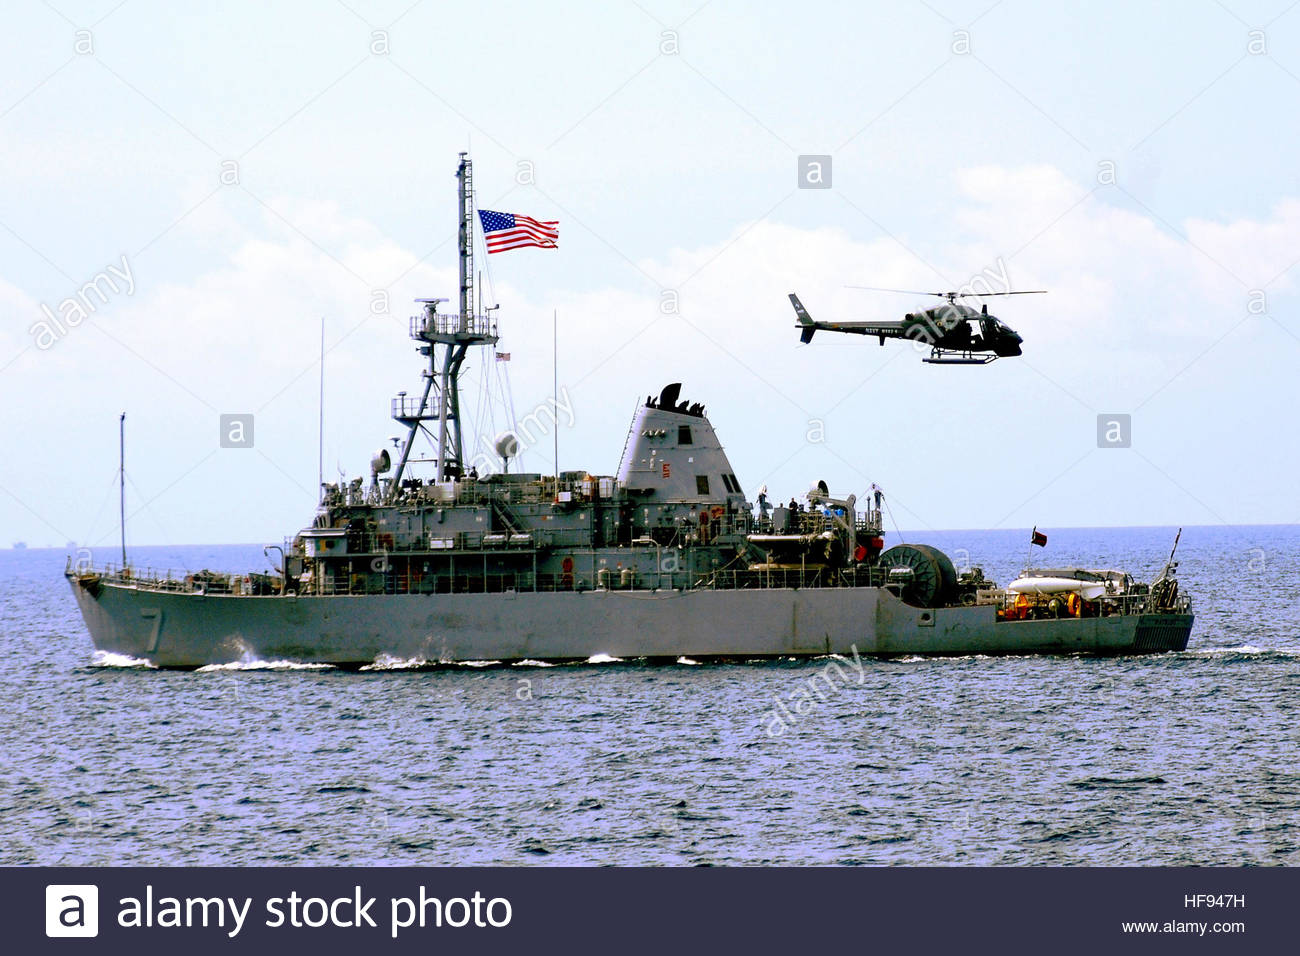 the-mine-countermeasures-ship-uss-patriot-mcm-7-departs-lumut-malaysia-HF947H.jpg